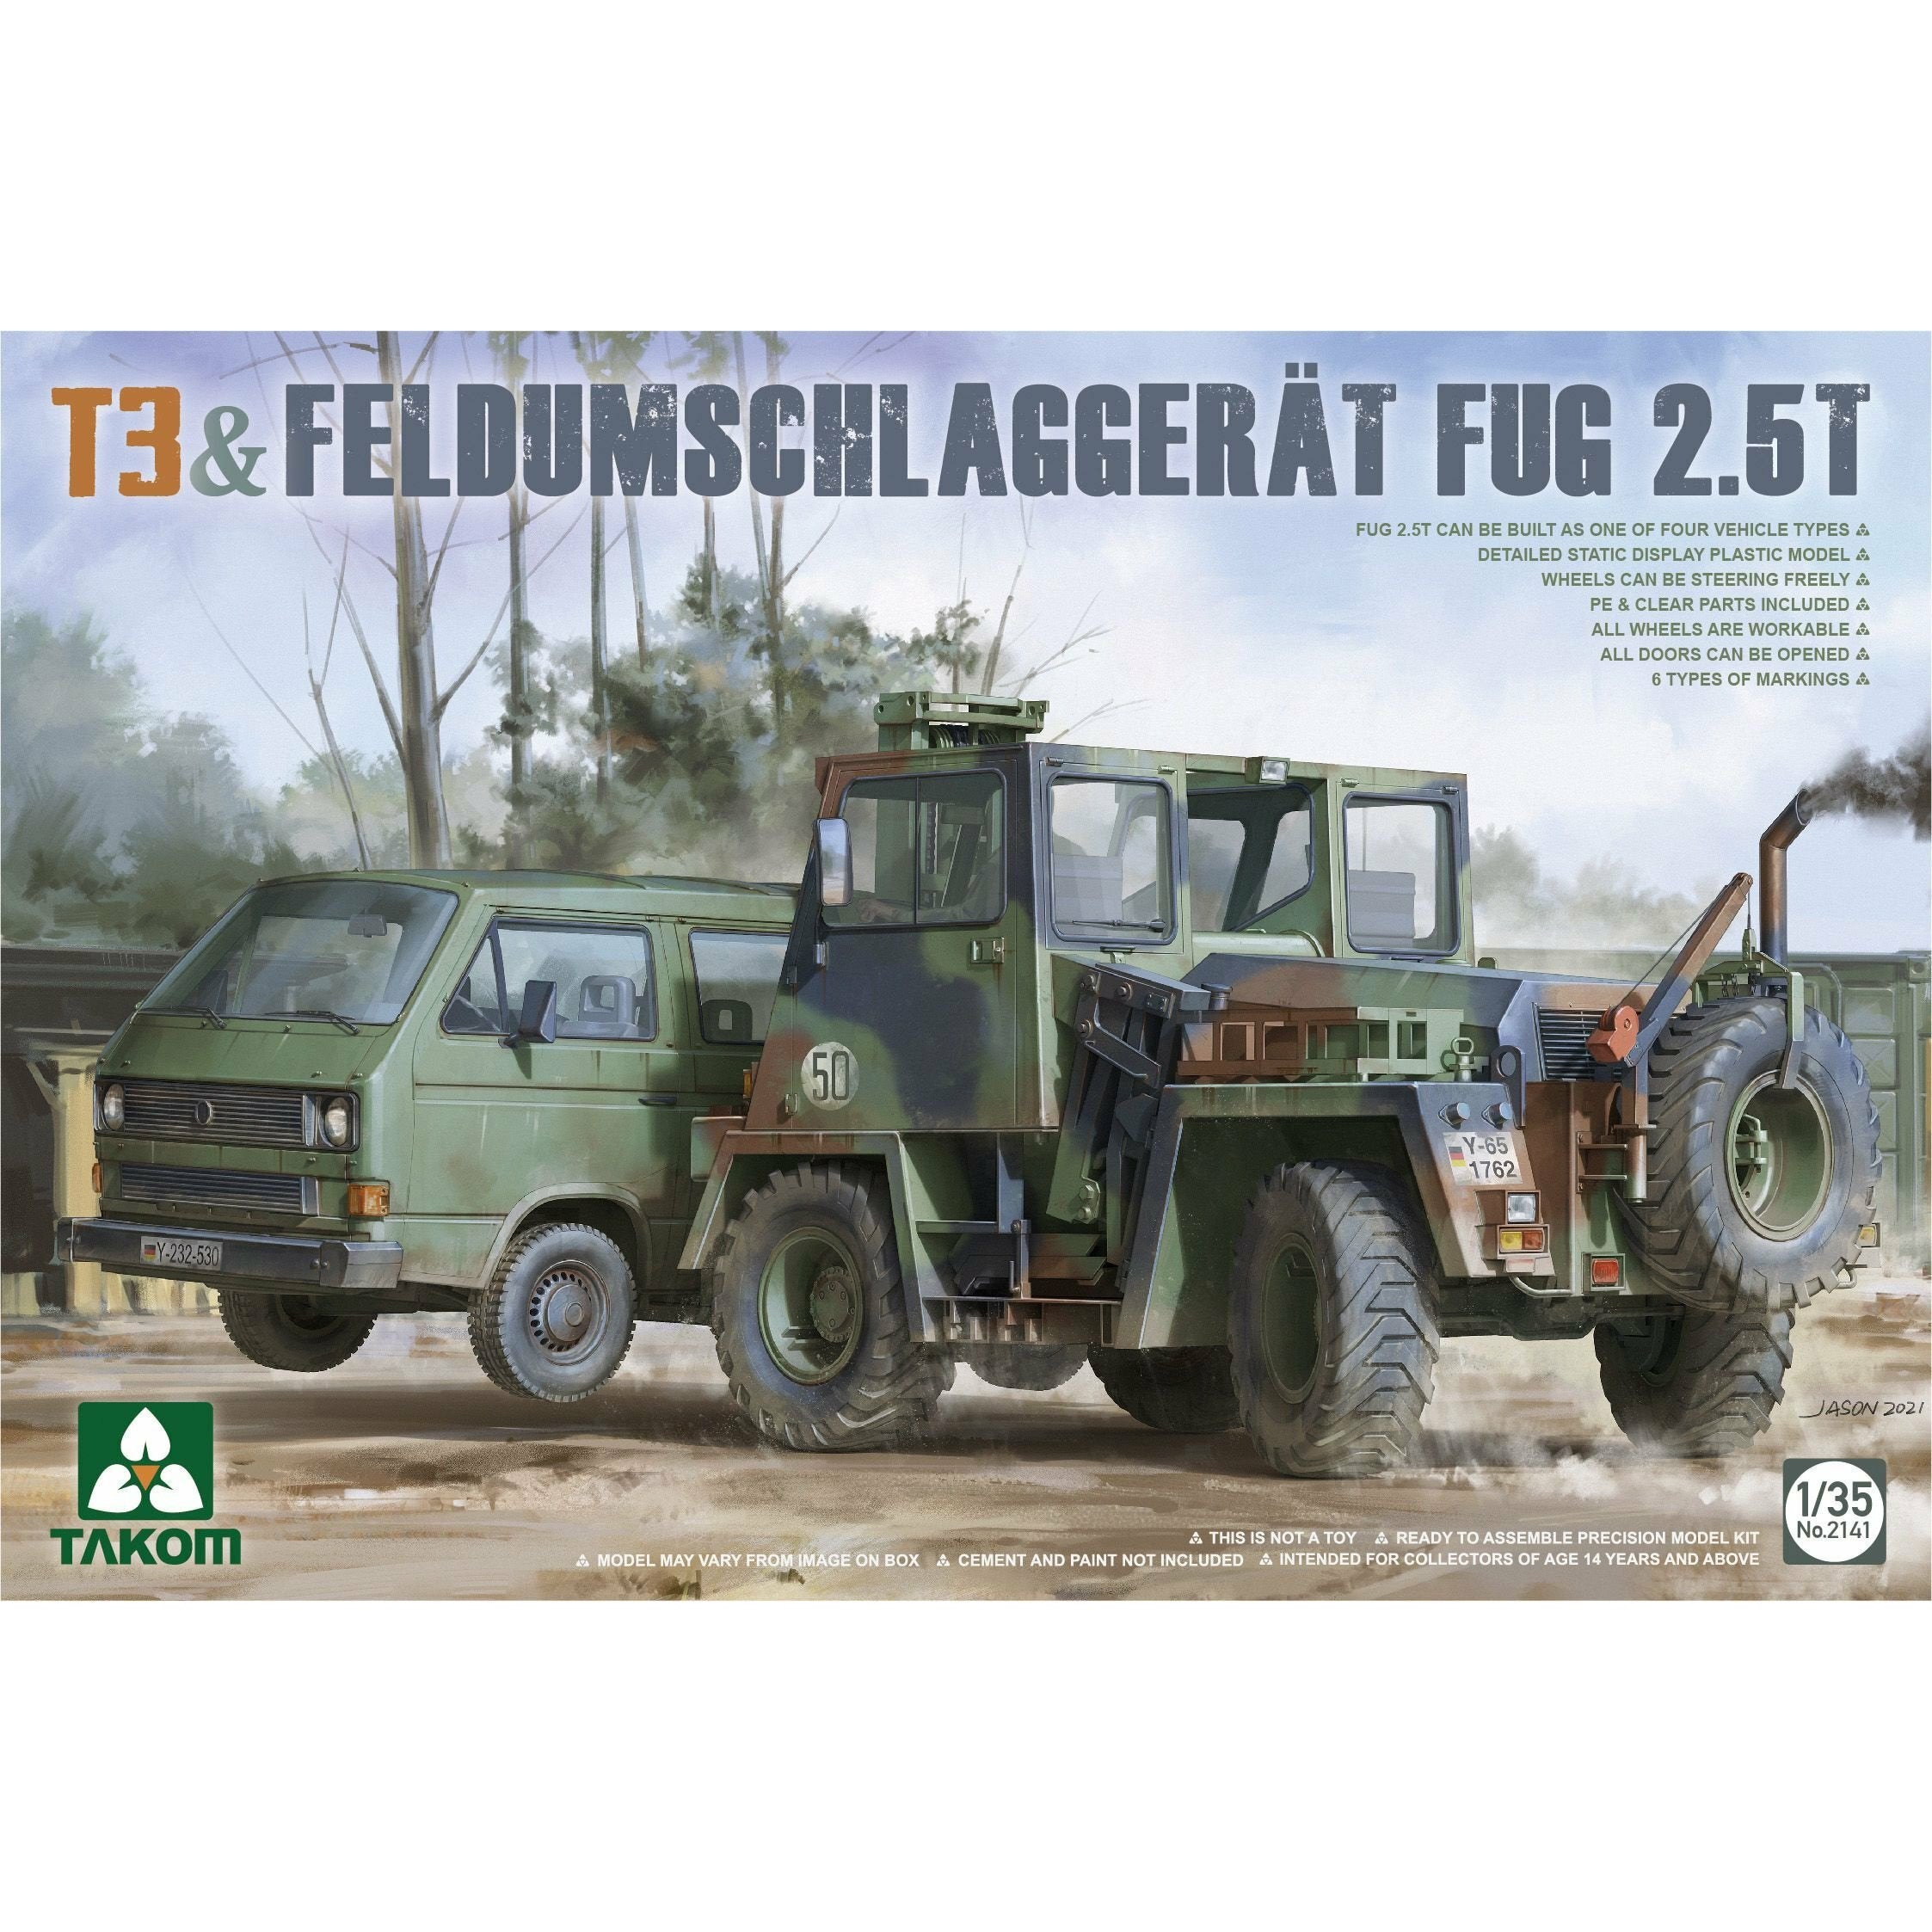 T3 & Feldumschlaggerat Fug 2.5T 1/34 #2141 by Takom